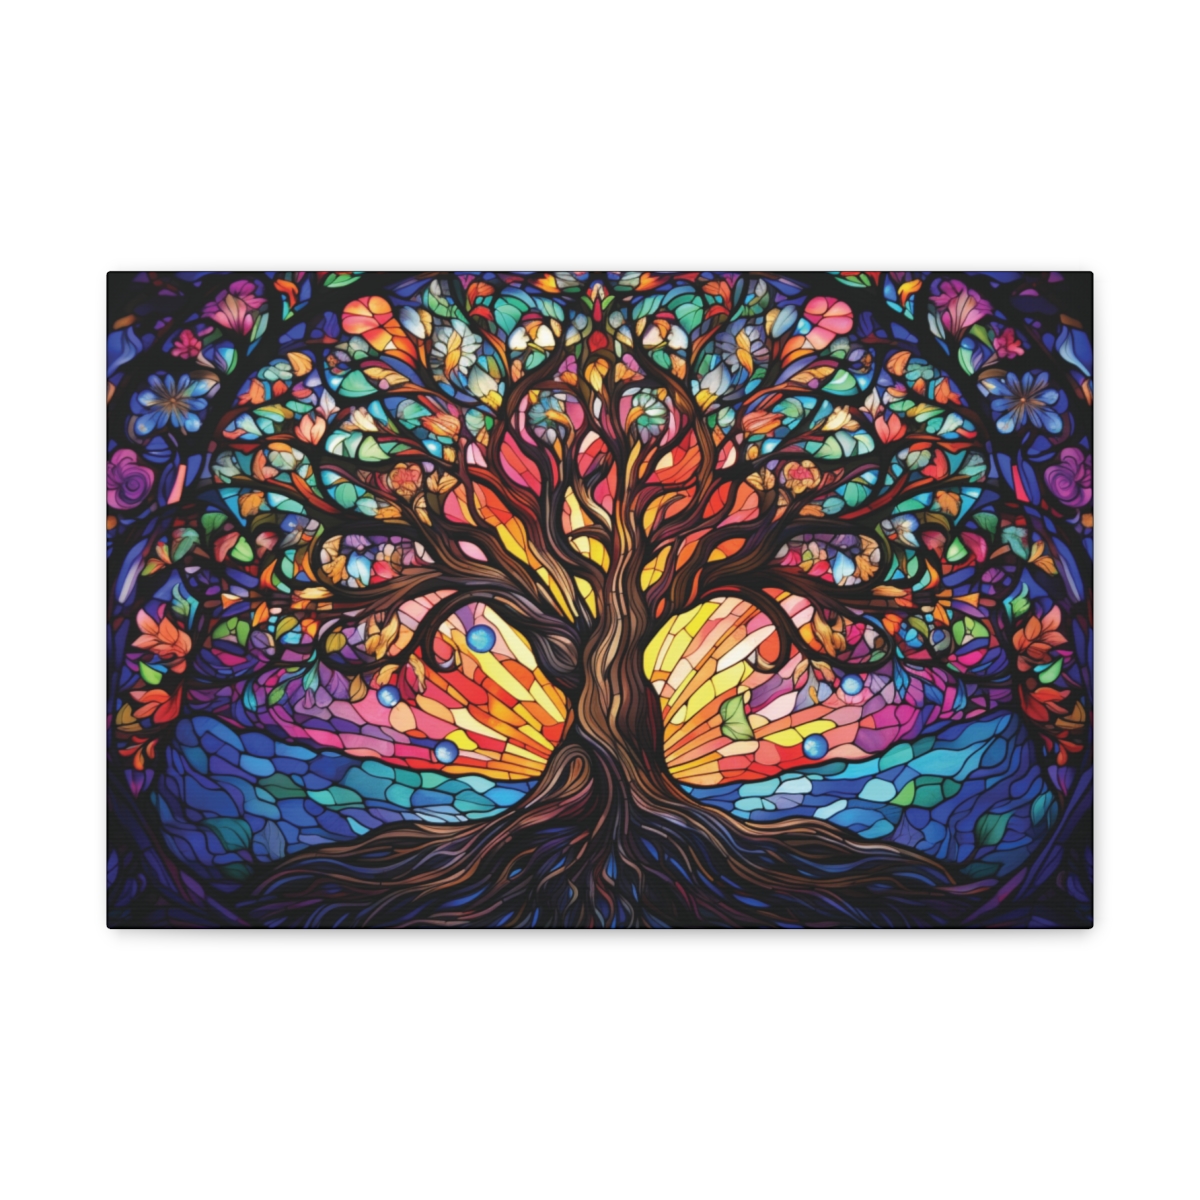 Spiritual Art: Tree of Wisdom